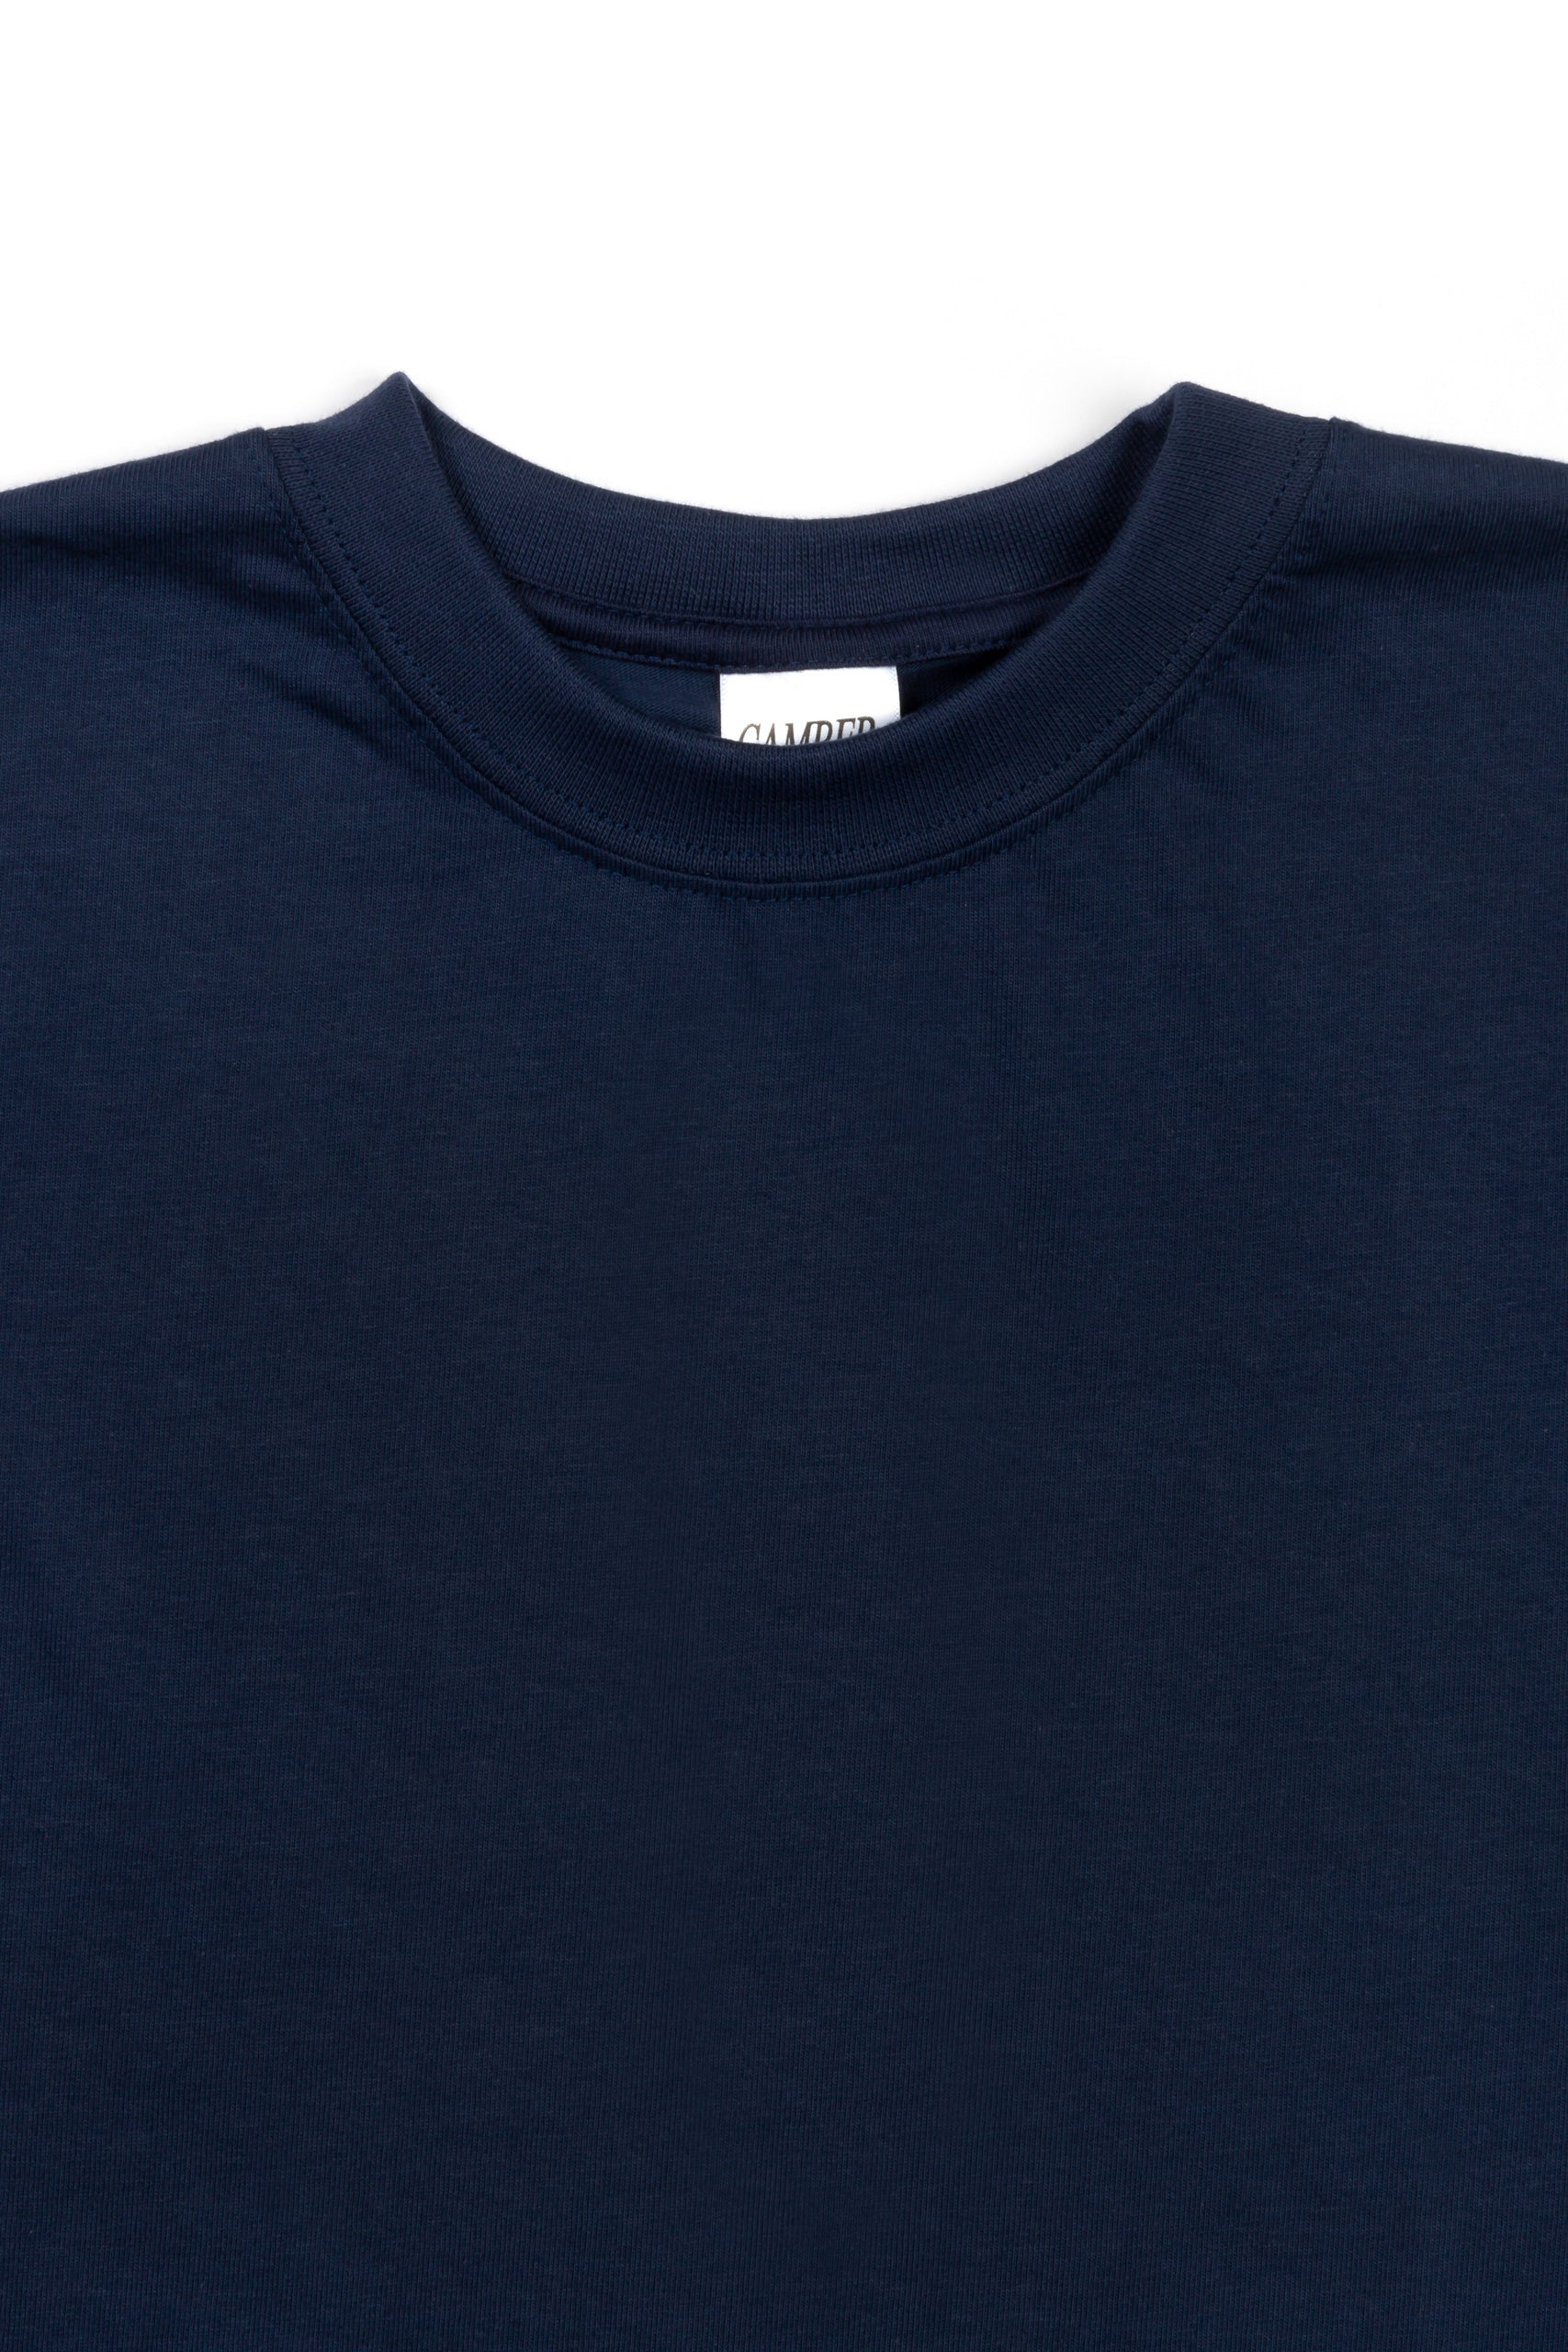 T-Shirt Camber Navy Embark Clothiers – USA 701 6oz